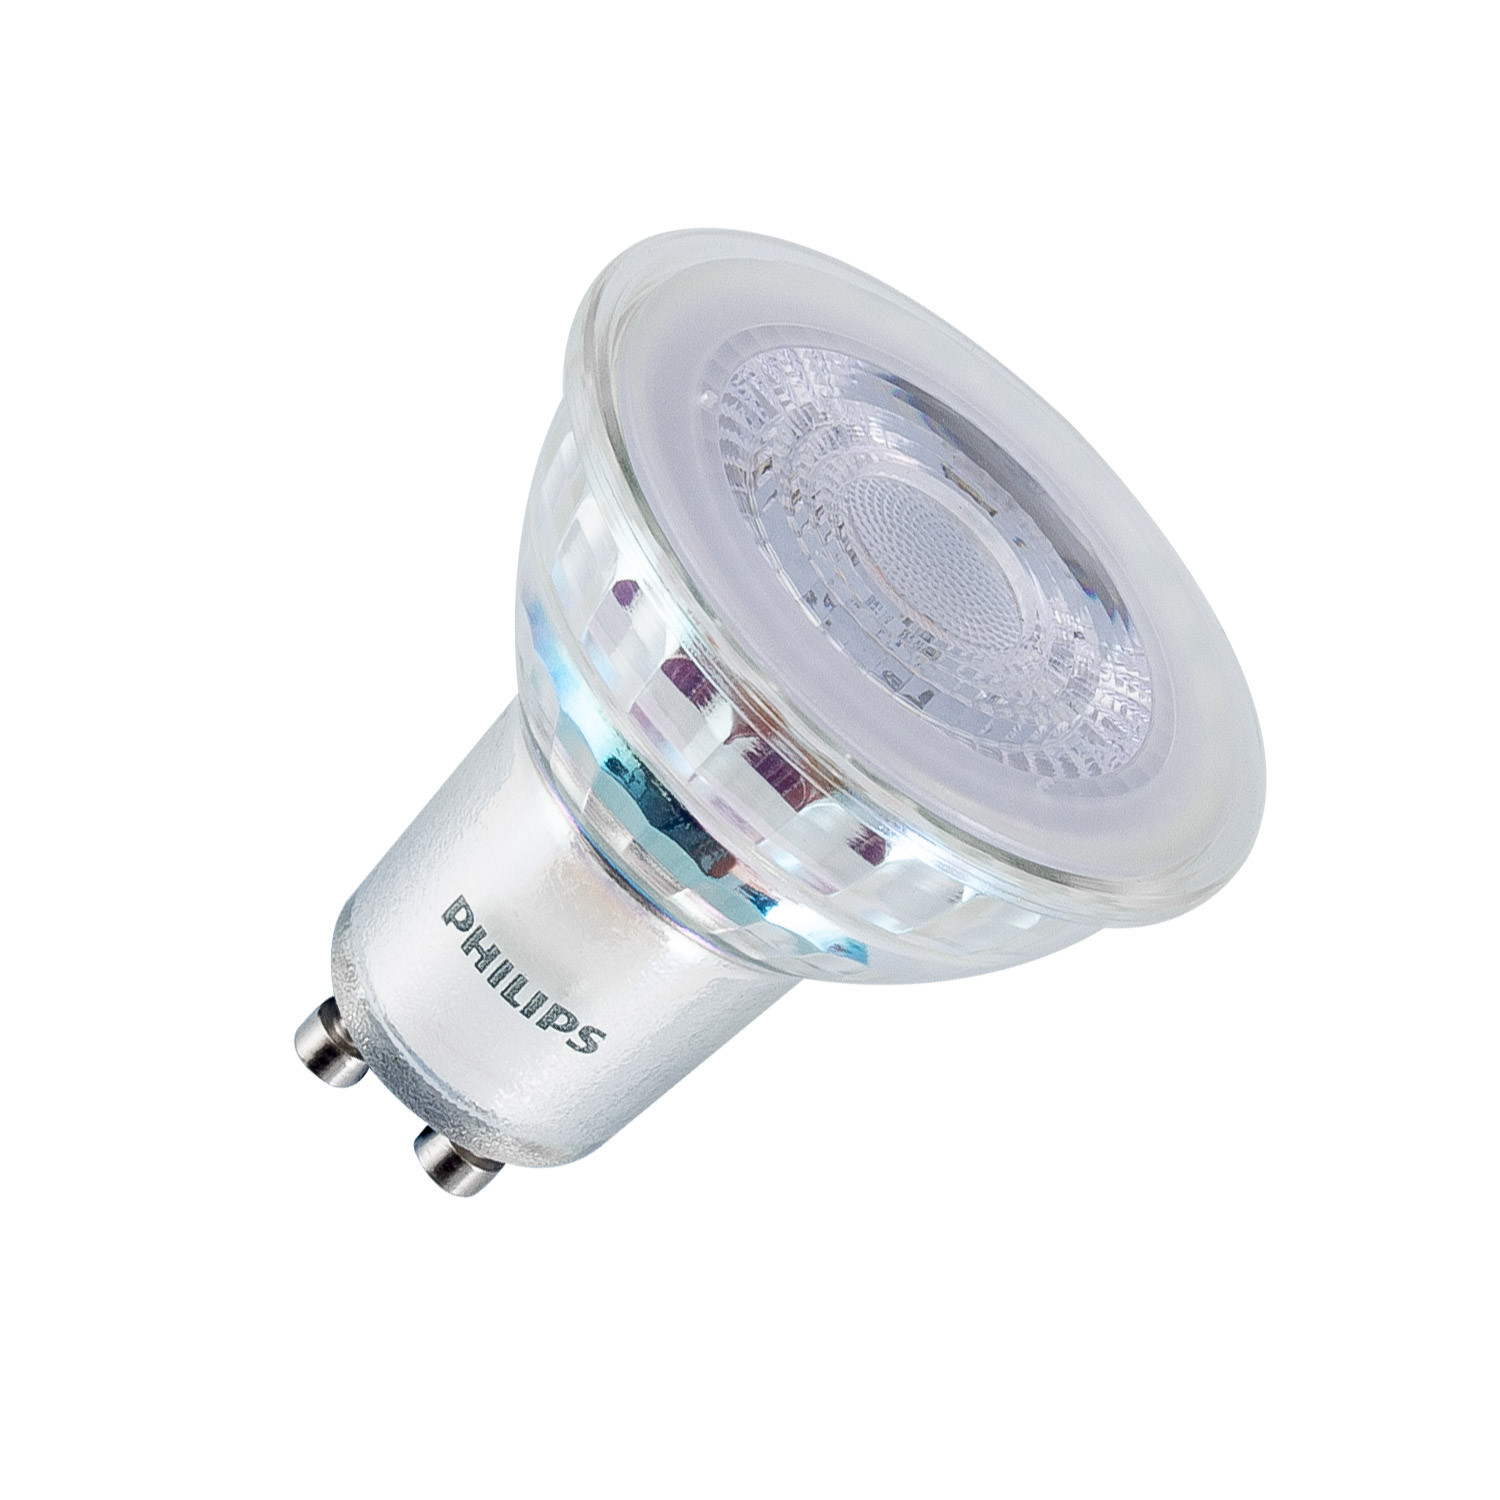 GU10 3.5W LED Flood Light Bulb with Glass Housing